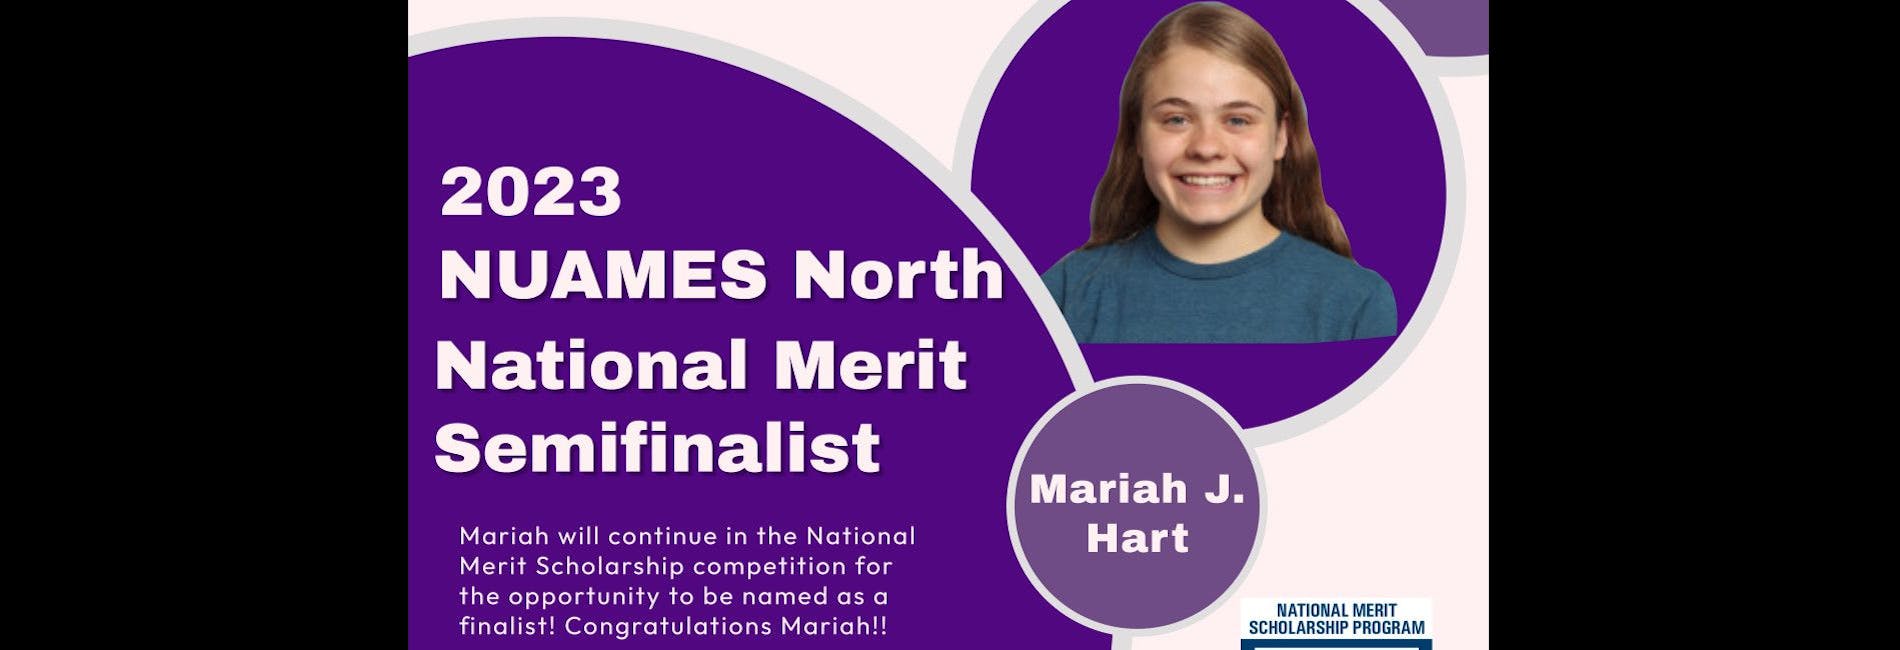  National Merit Semifinalist for North Campus 